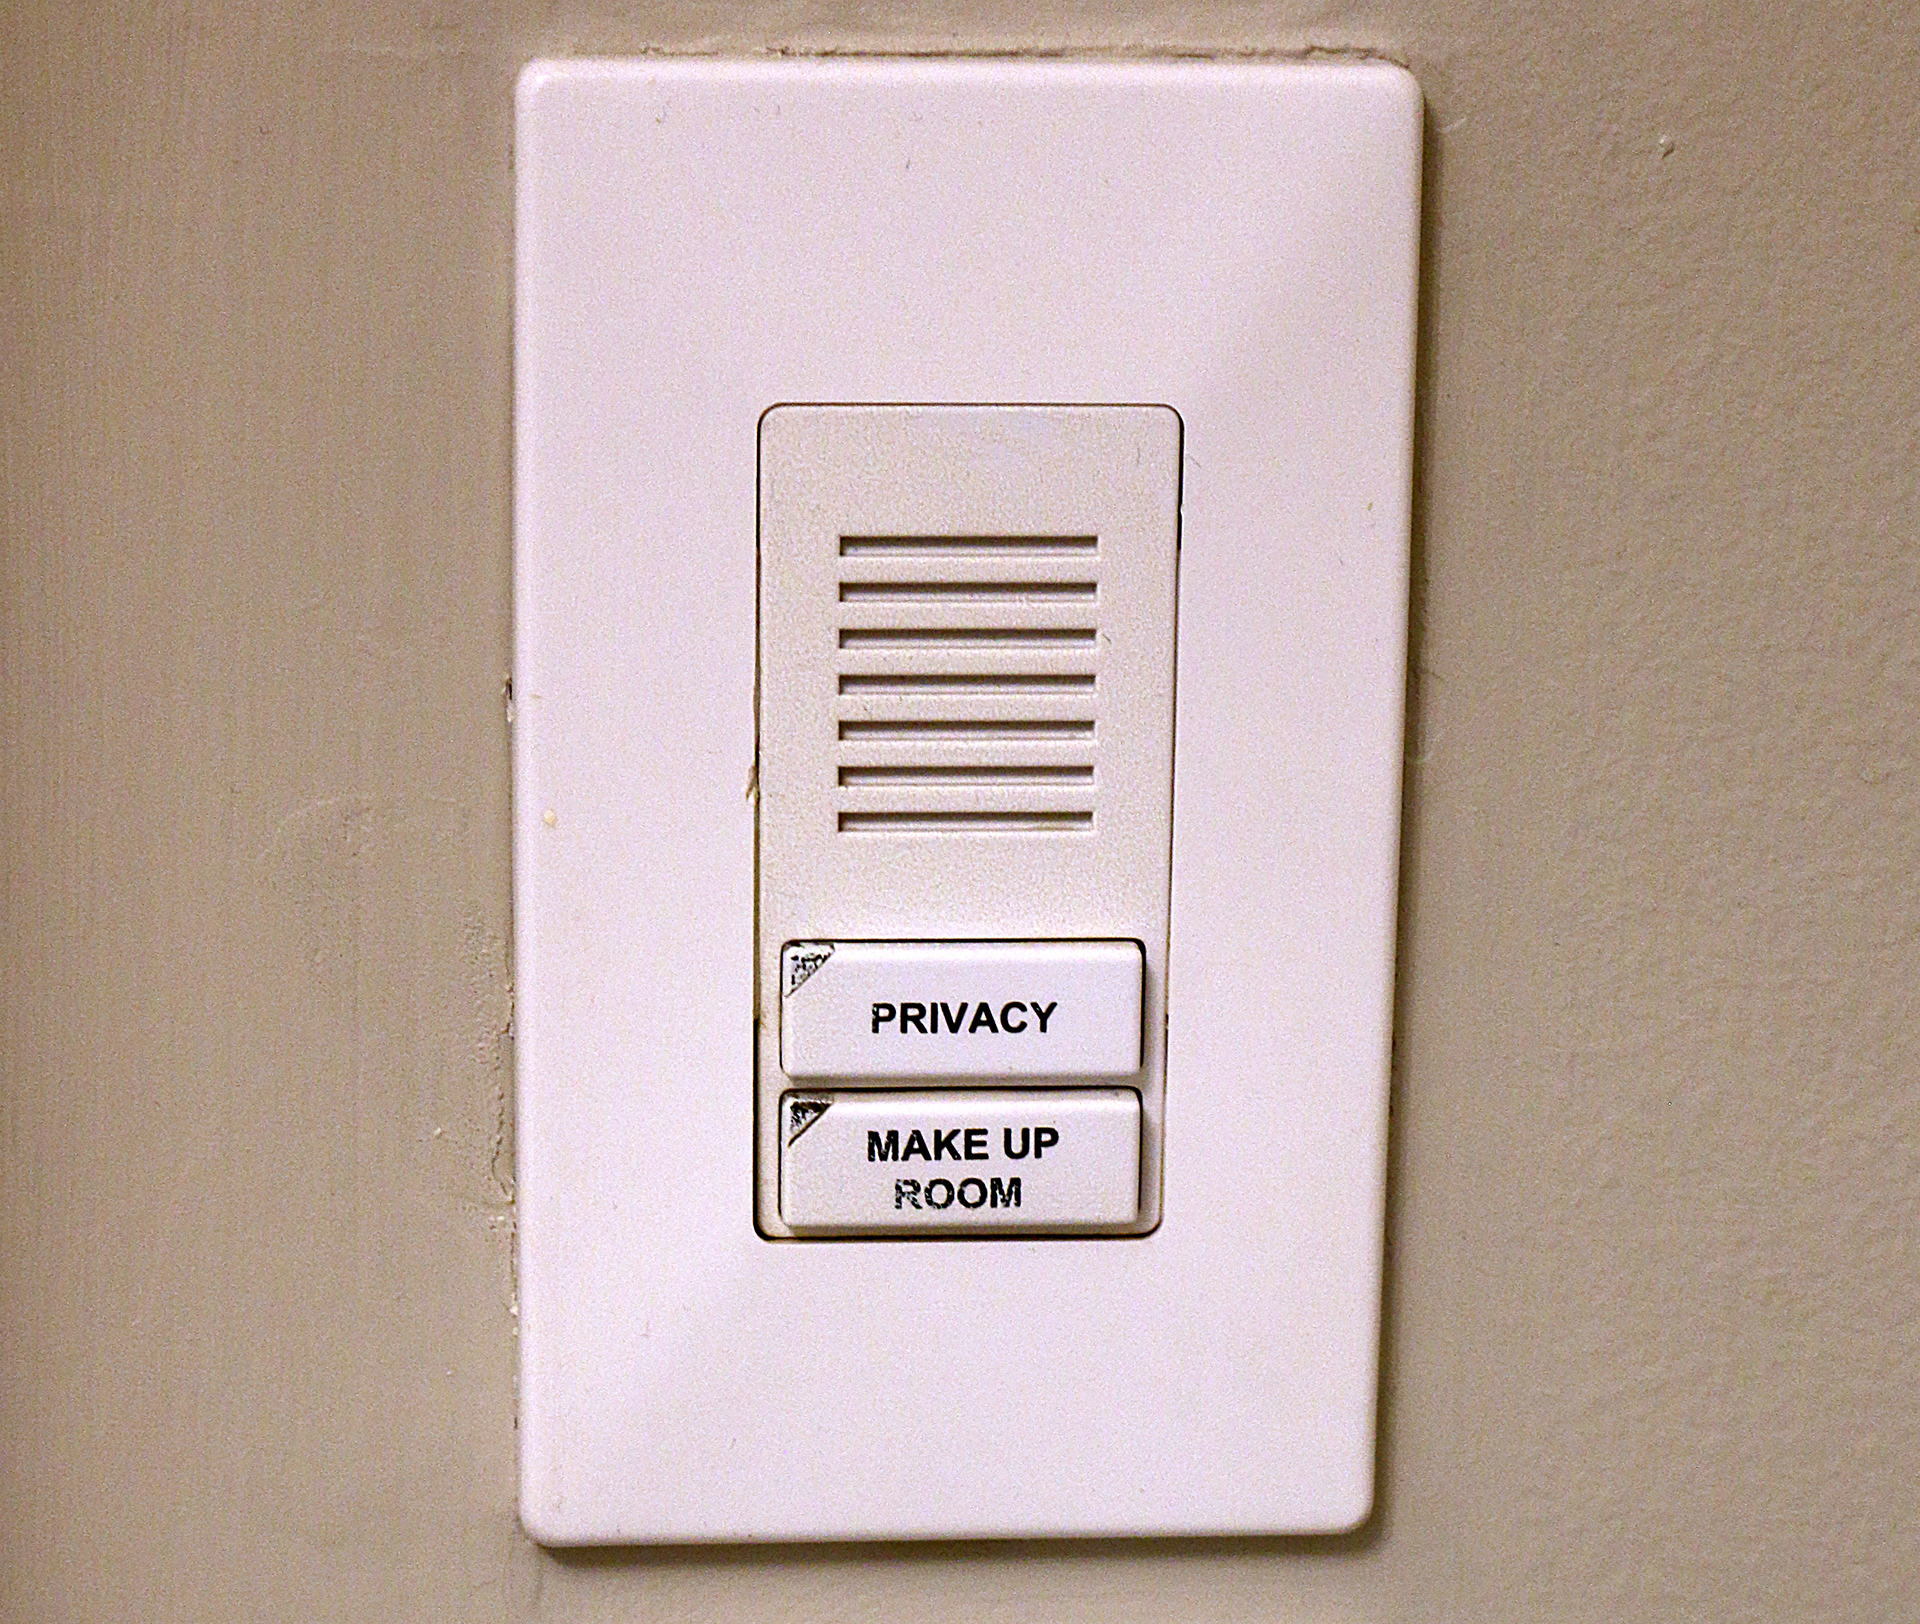 Privacy button do not disturb